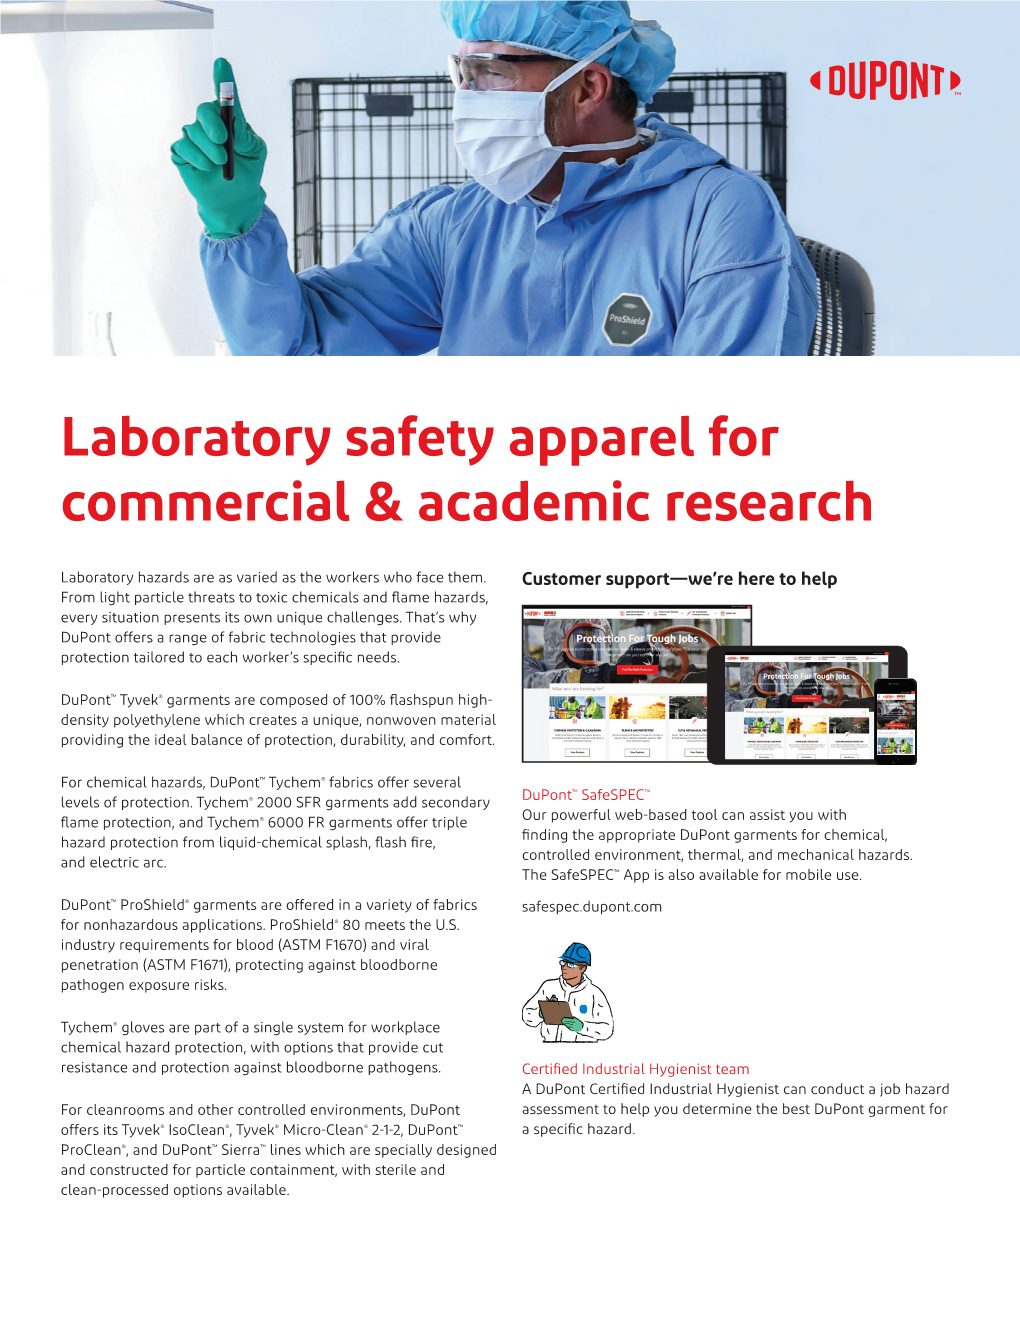 Dupont Lab Safety Apparel Brochure